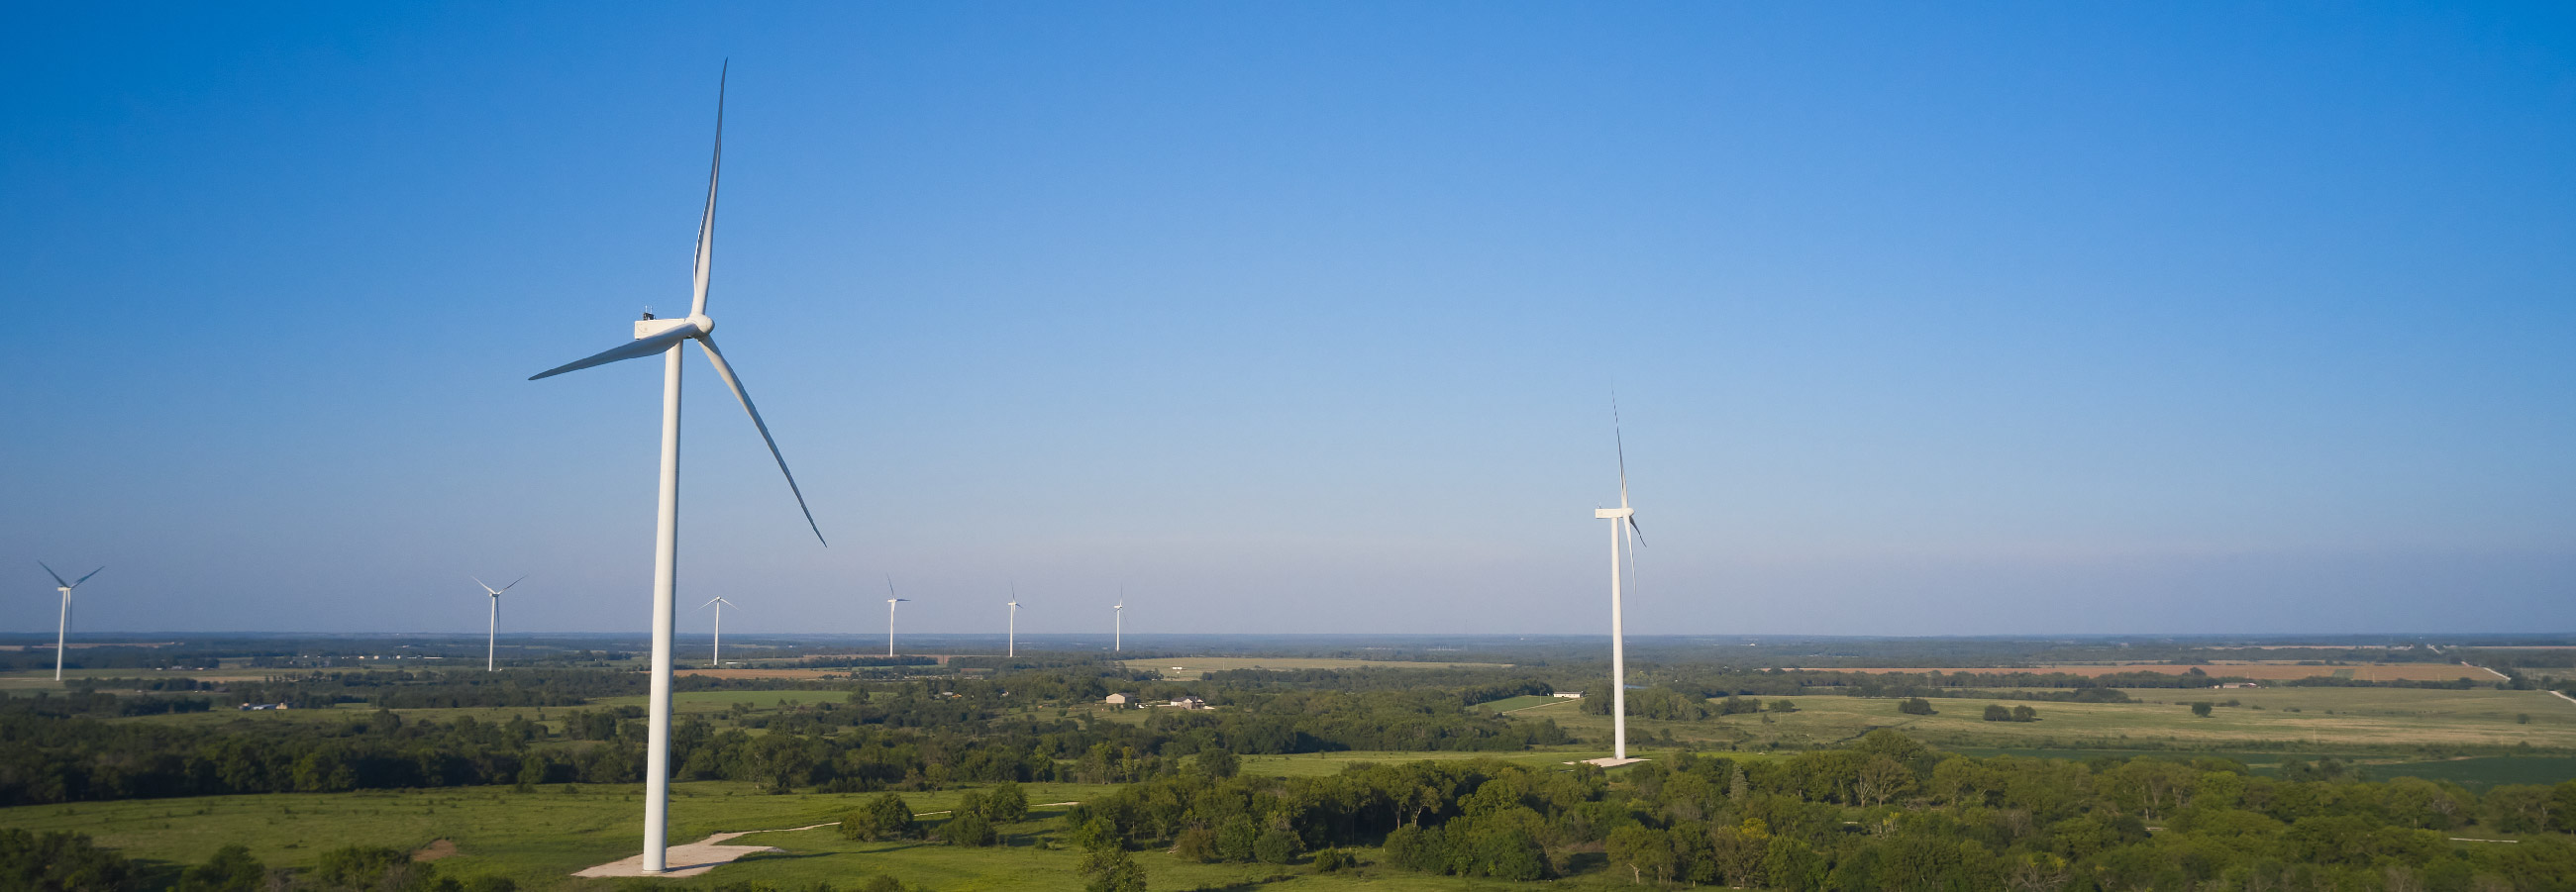 Renewable energy production in Iowa